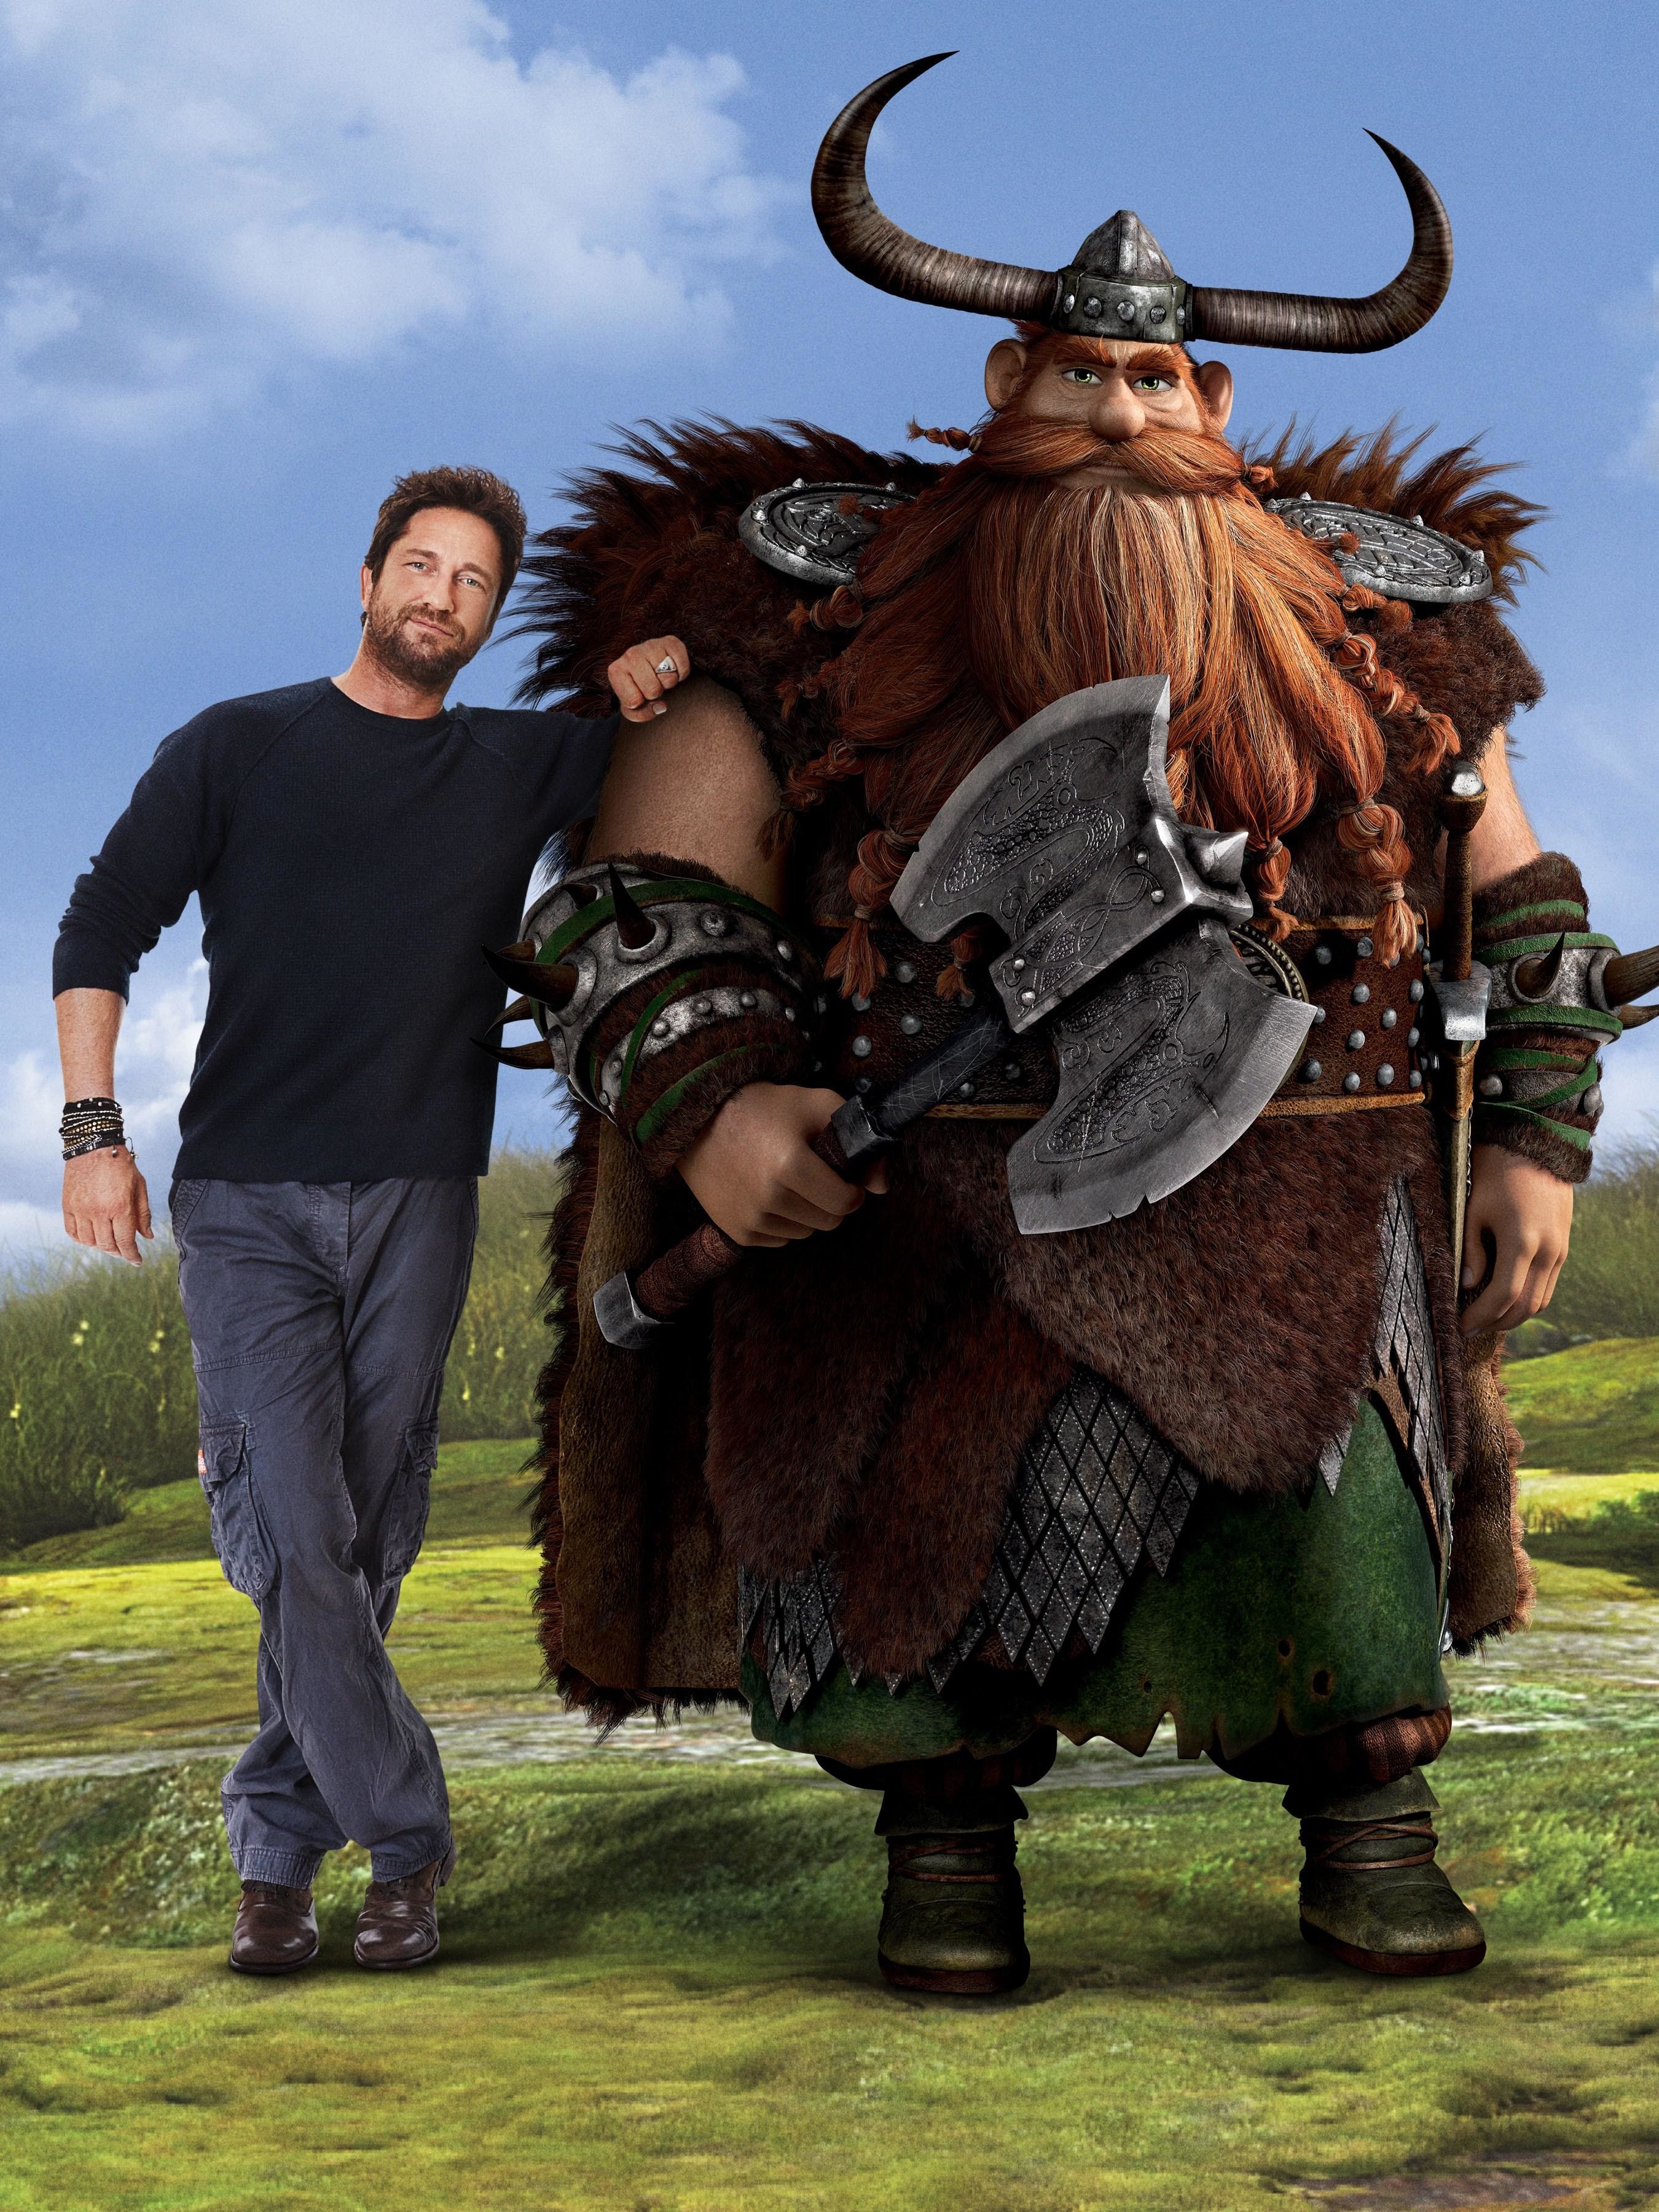 Gerard Butler takes a promotional photo next to his CGI counterpart, Stoick